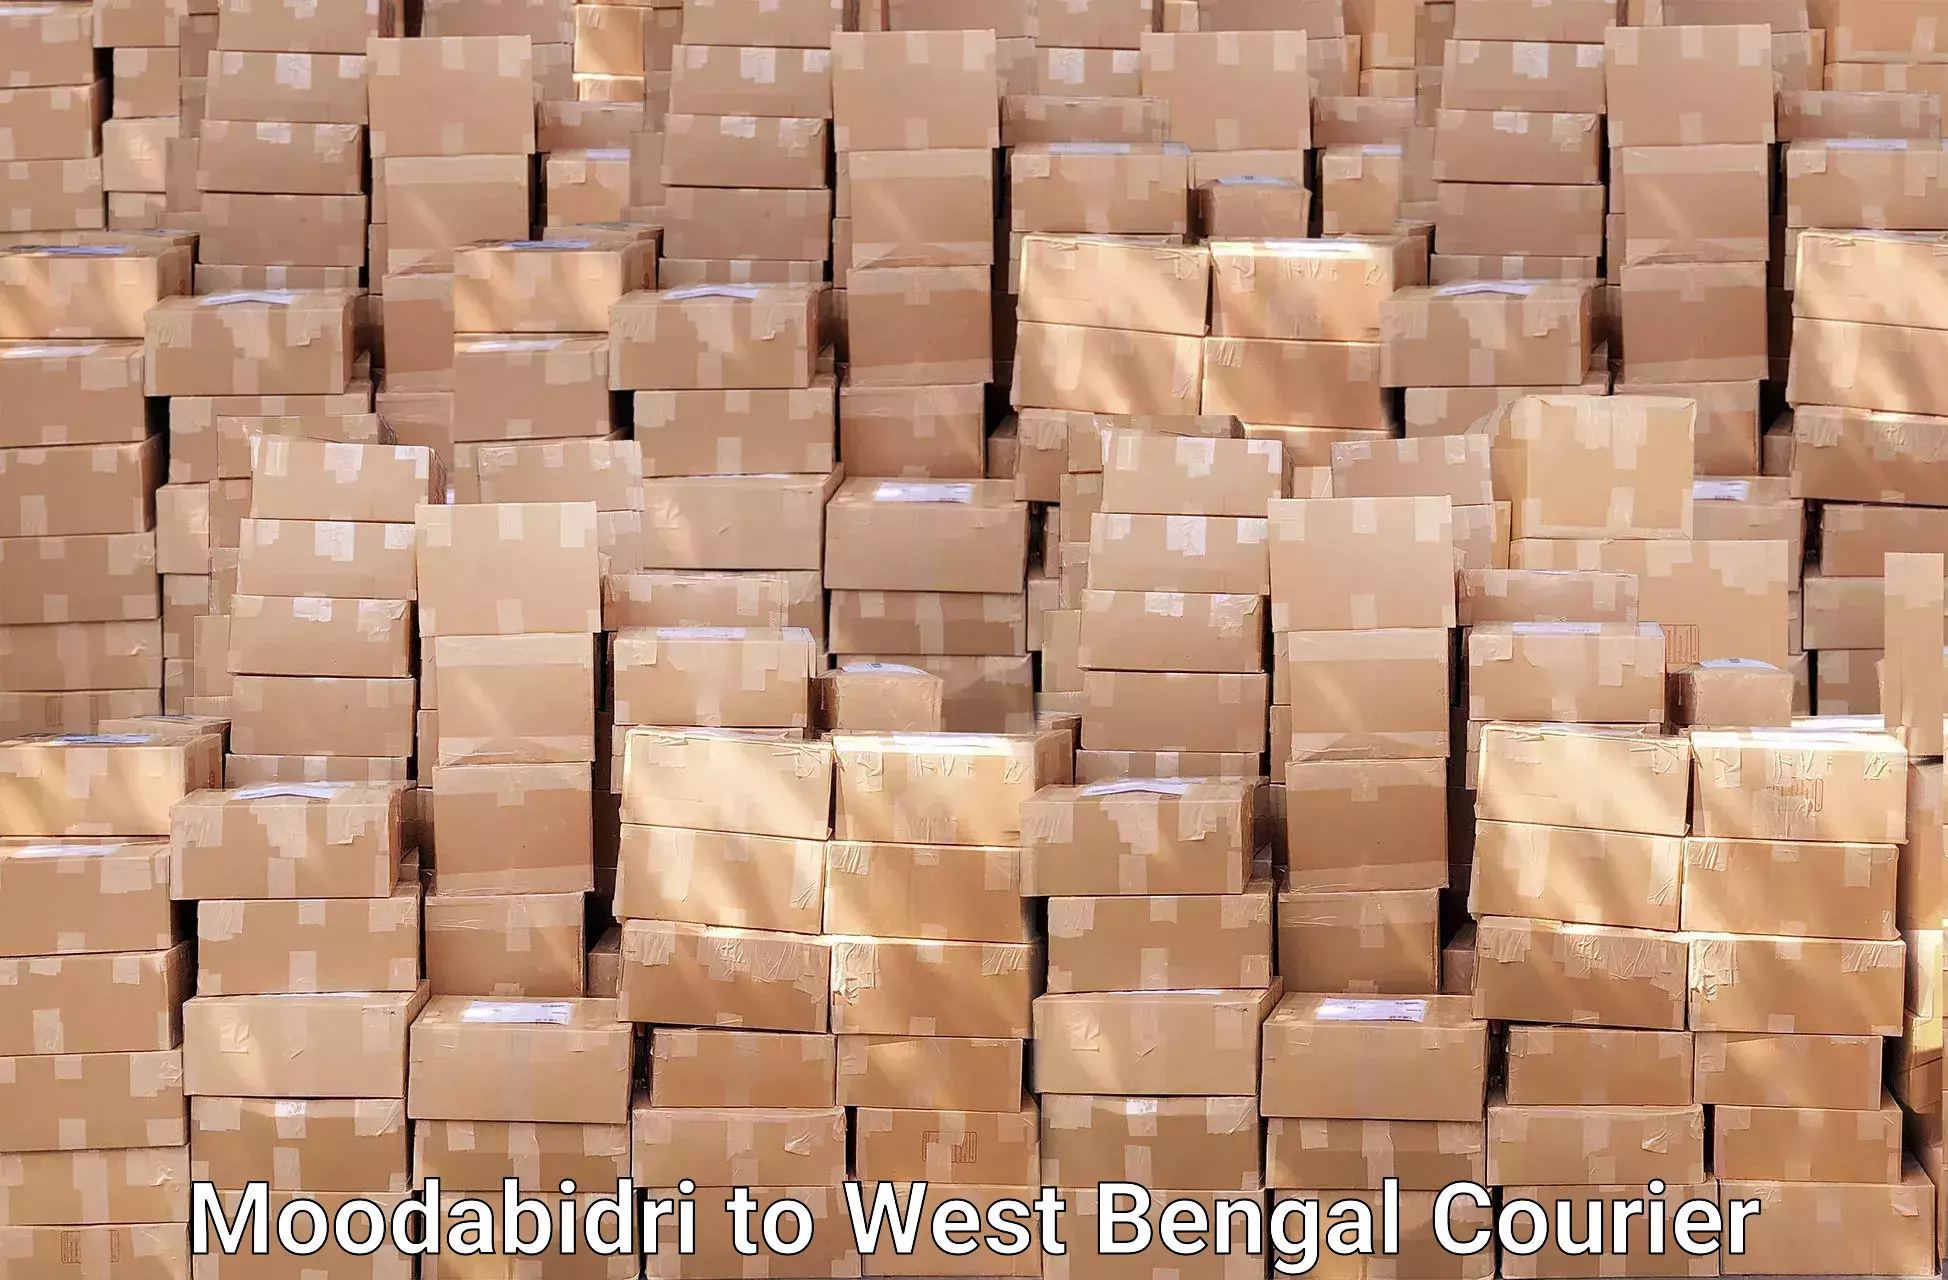 Professional moving company Moodabidri to West Bengal